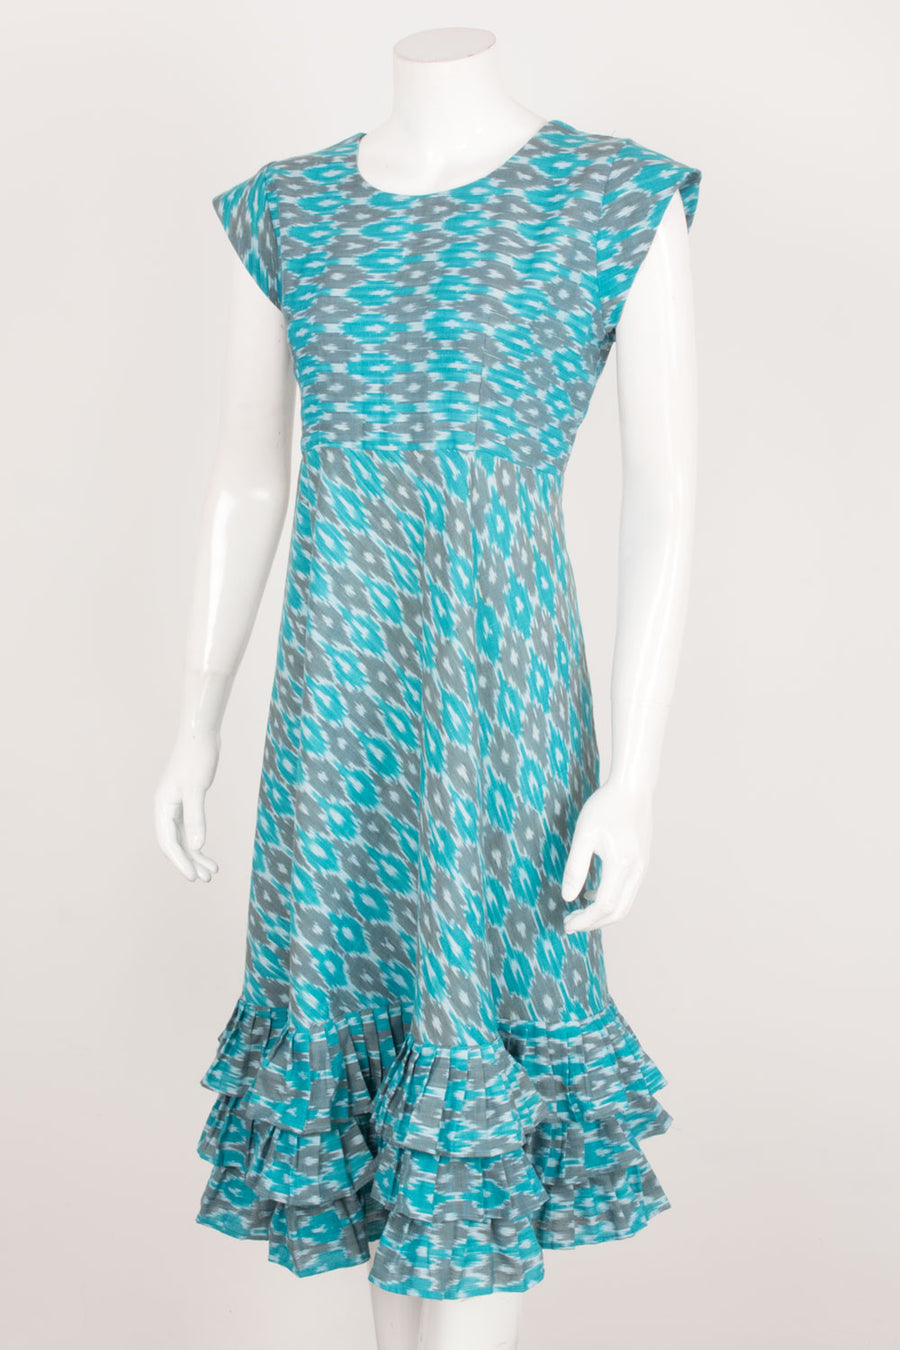 Handloom Ikat A-line Cotton dress with Ruffled Hemline, Cap Sleeve and Back Zip